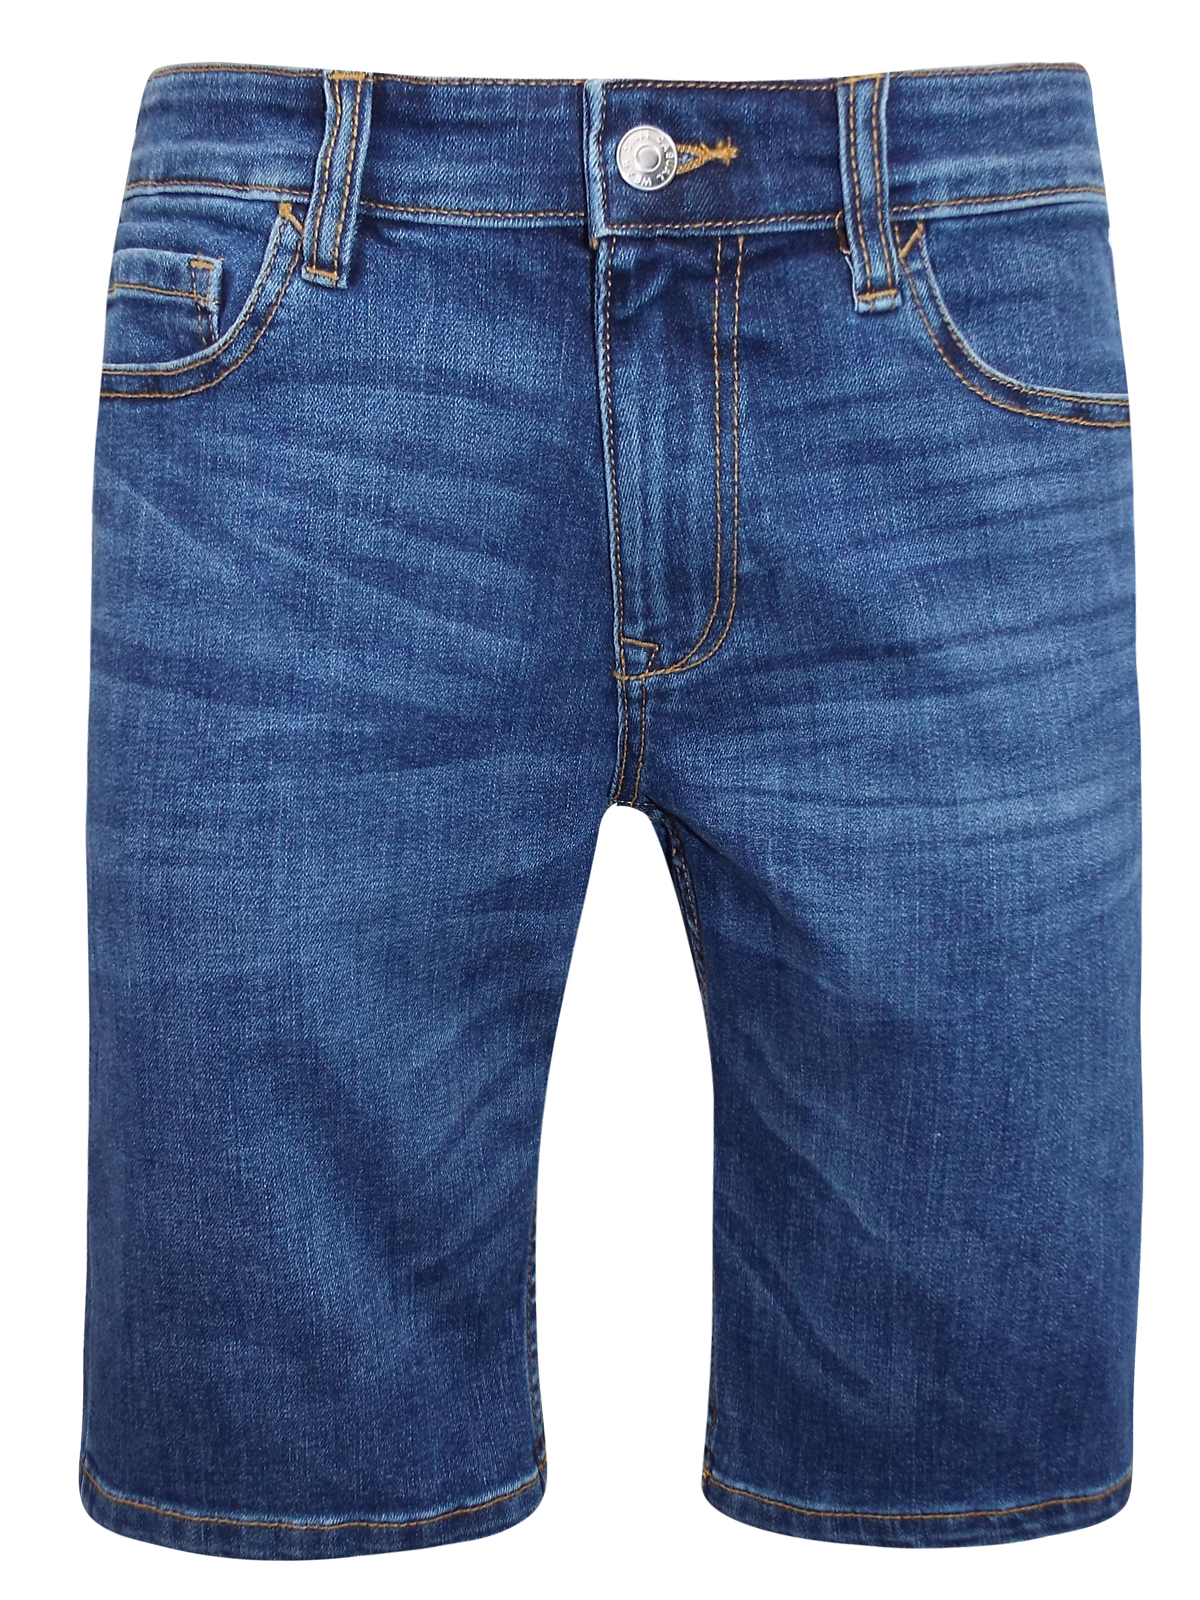 M4ngo Assorted Cotton Rich 5 Pocket Denim Shorts Waist Size 30 To 36